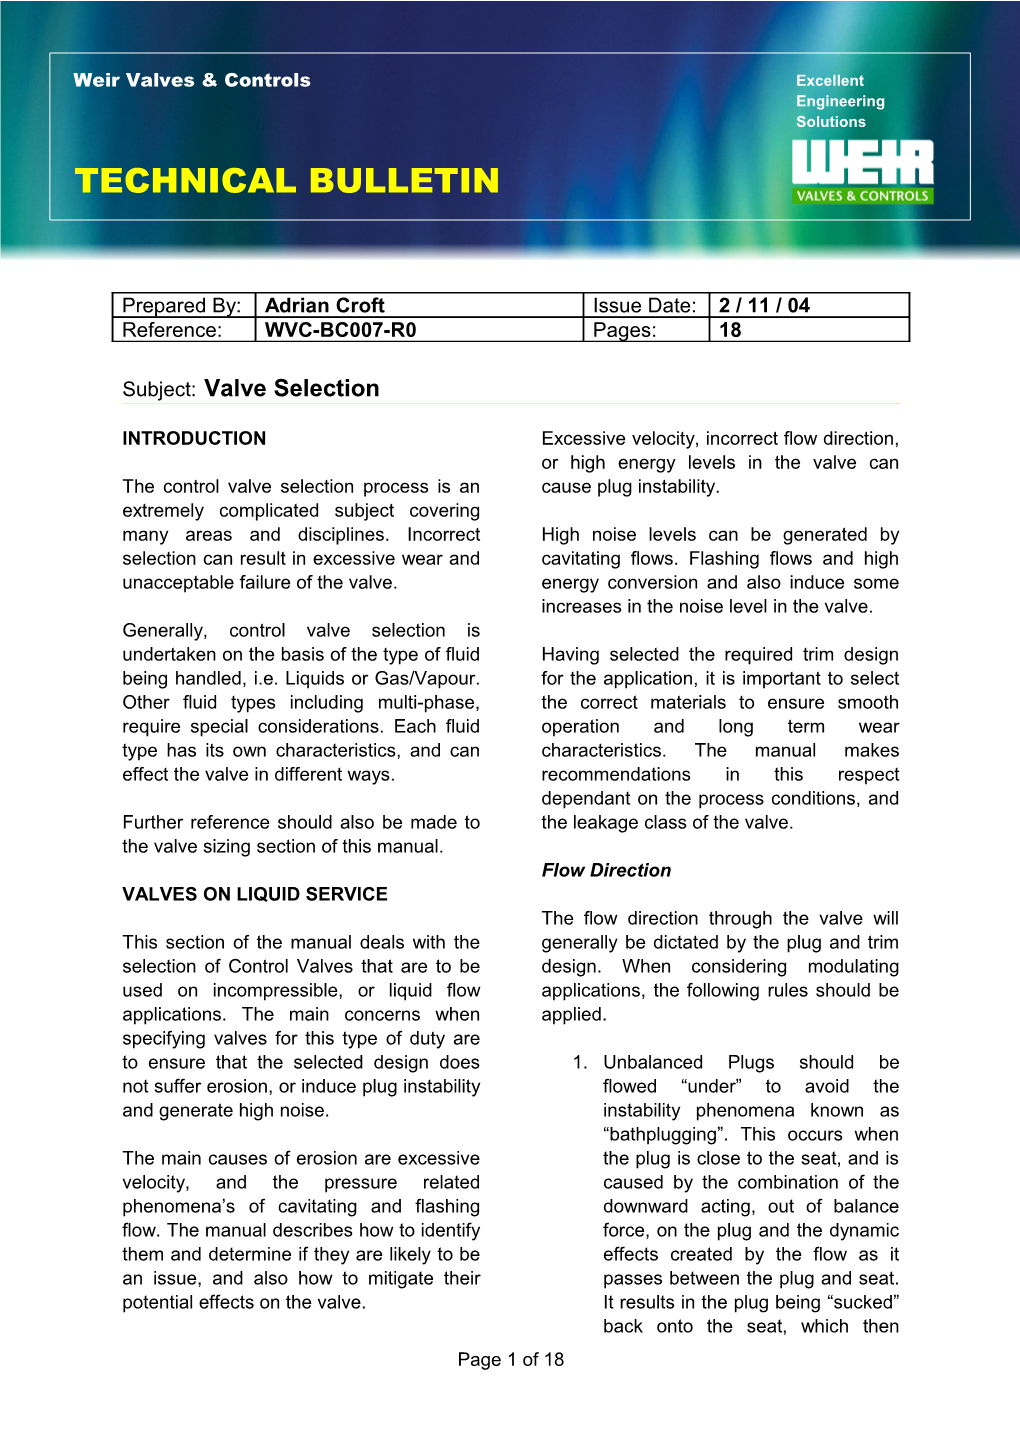 Technical Bulletin Continuation Sheet